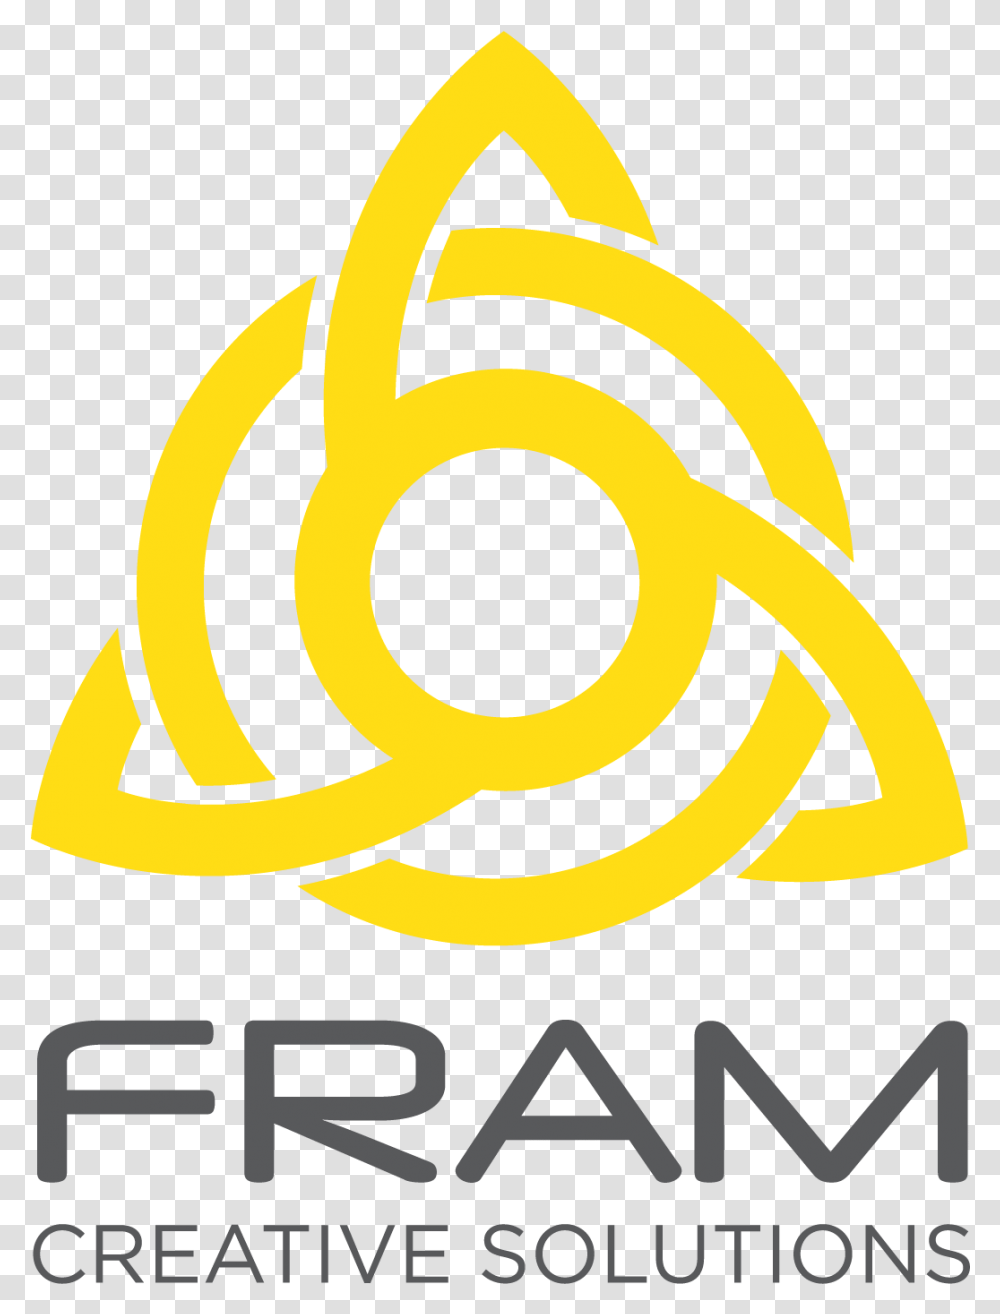 Fram Creative Solutions Competitive Cyclist, Logo, Trademark, Banana Transparent Png